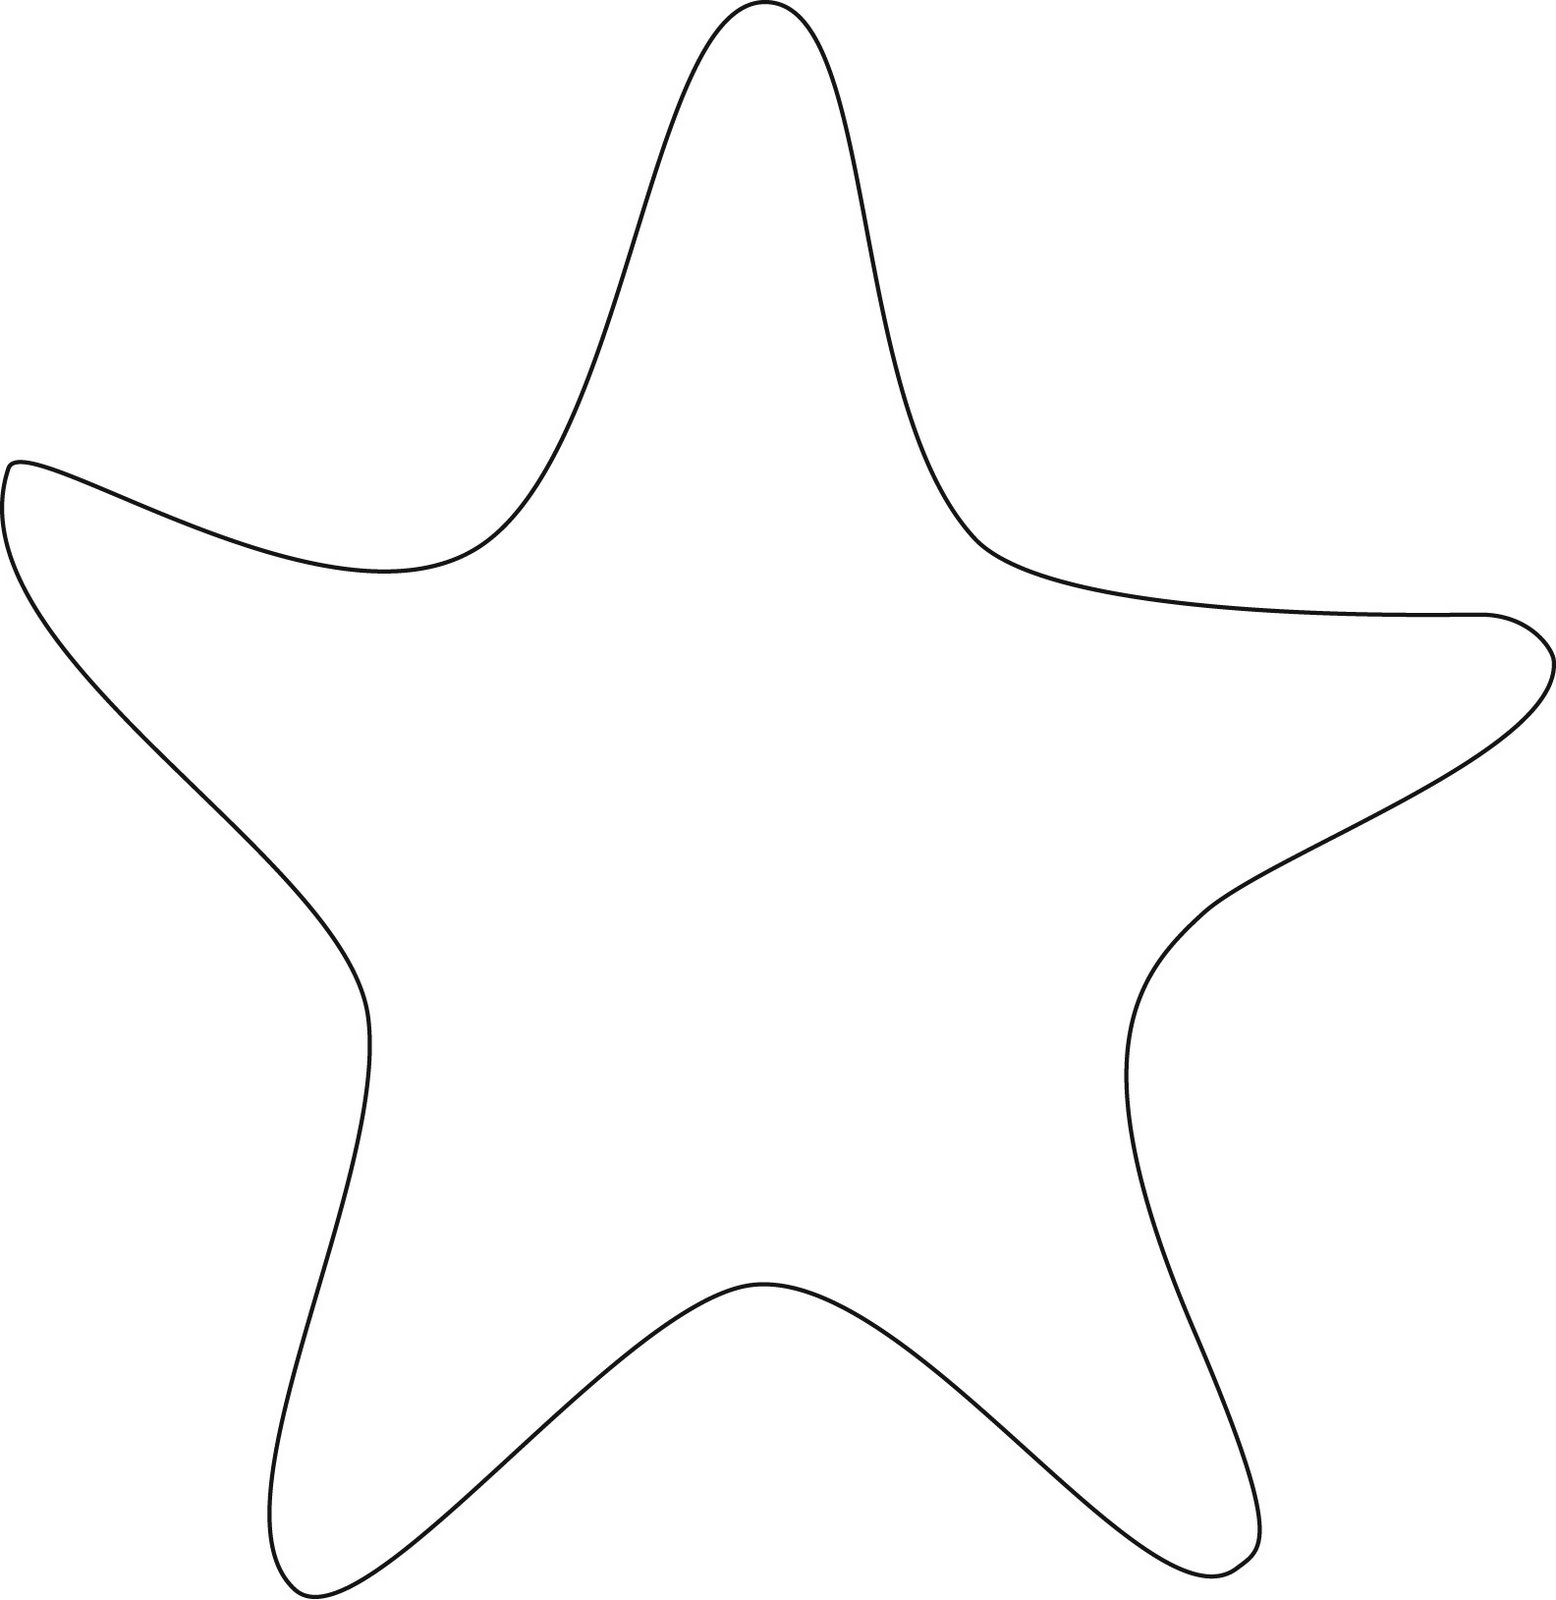 Starfish Template - PicsAnt